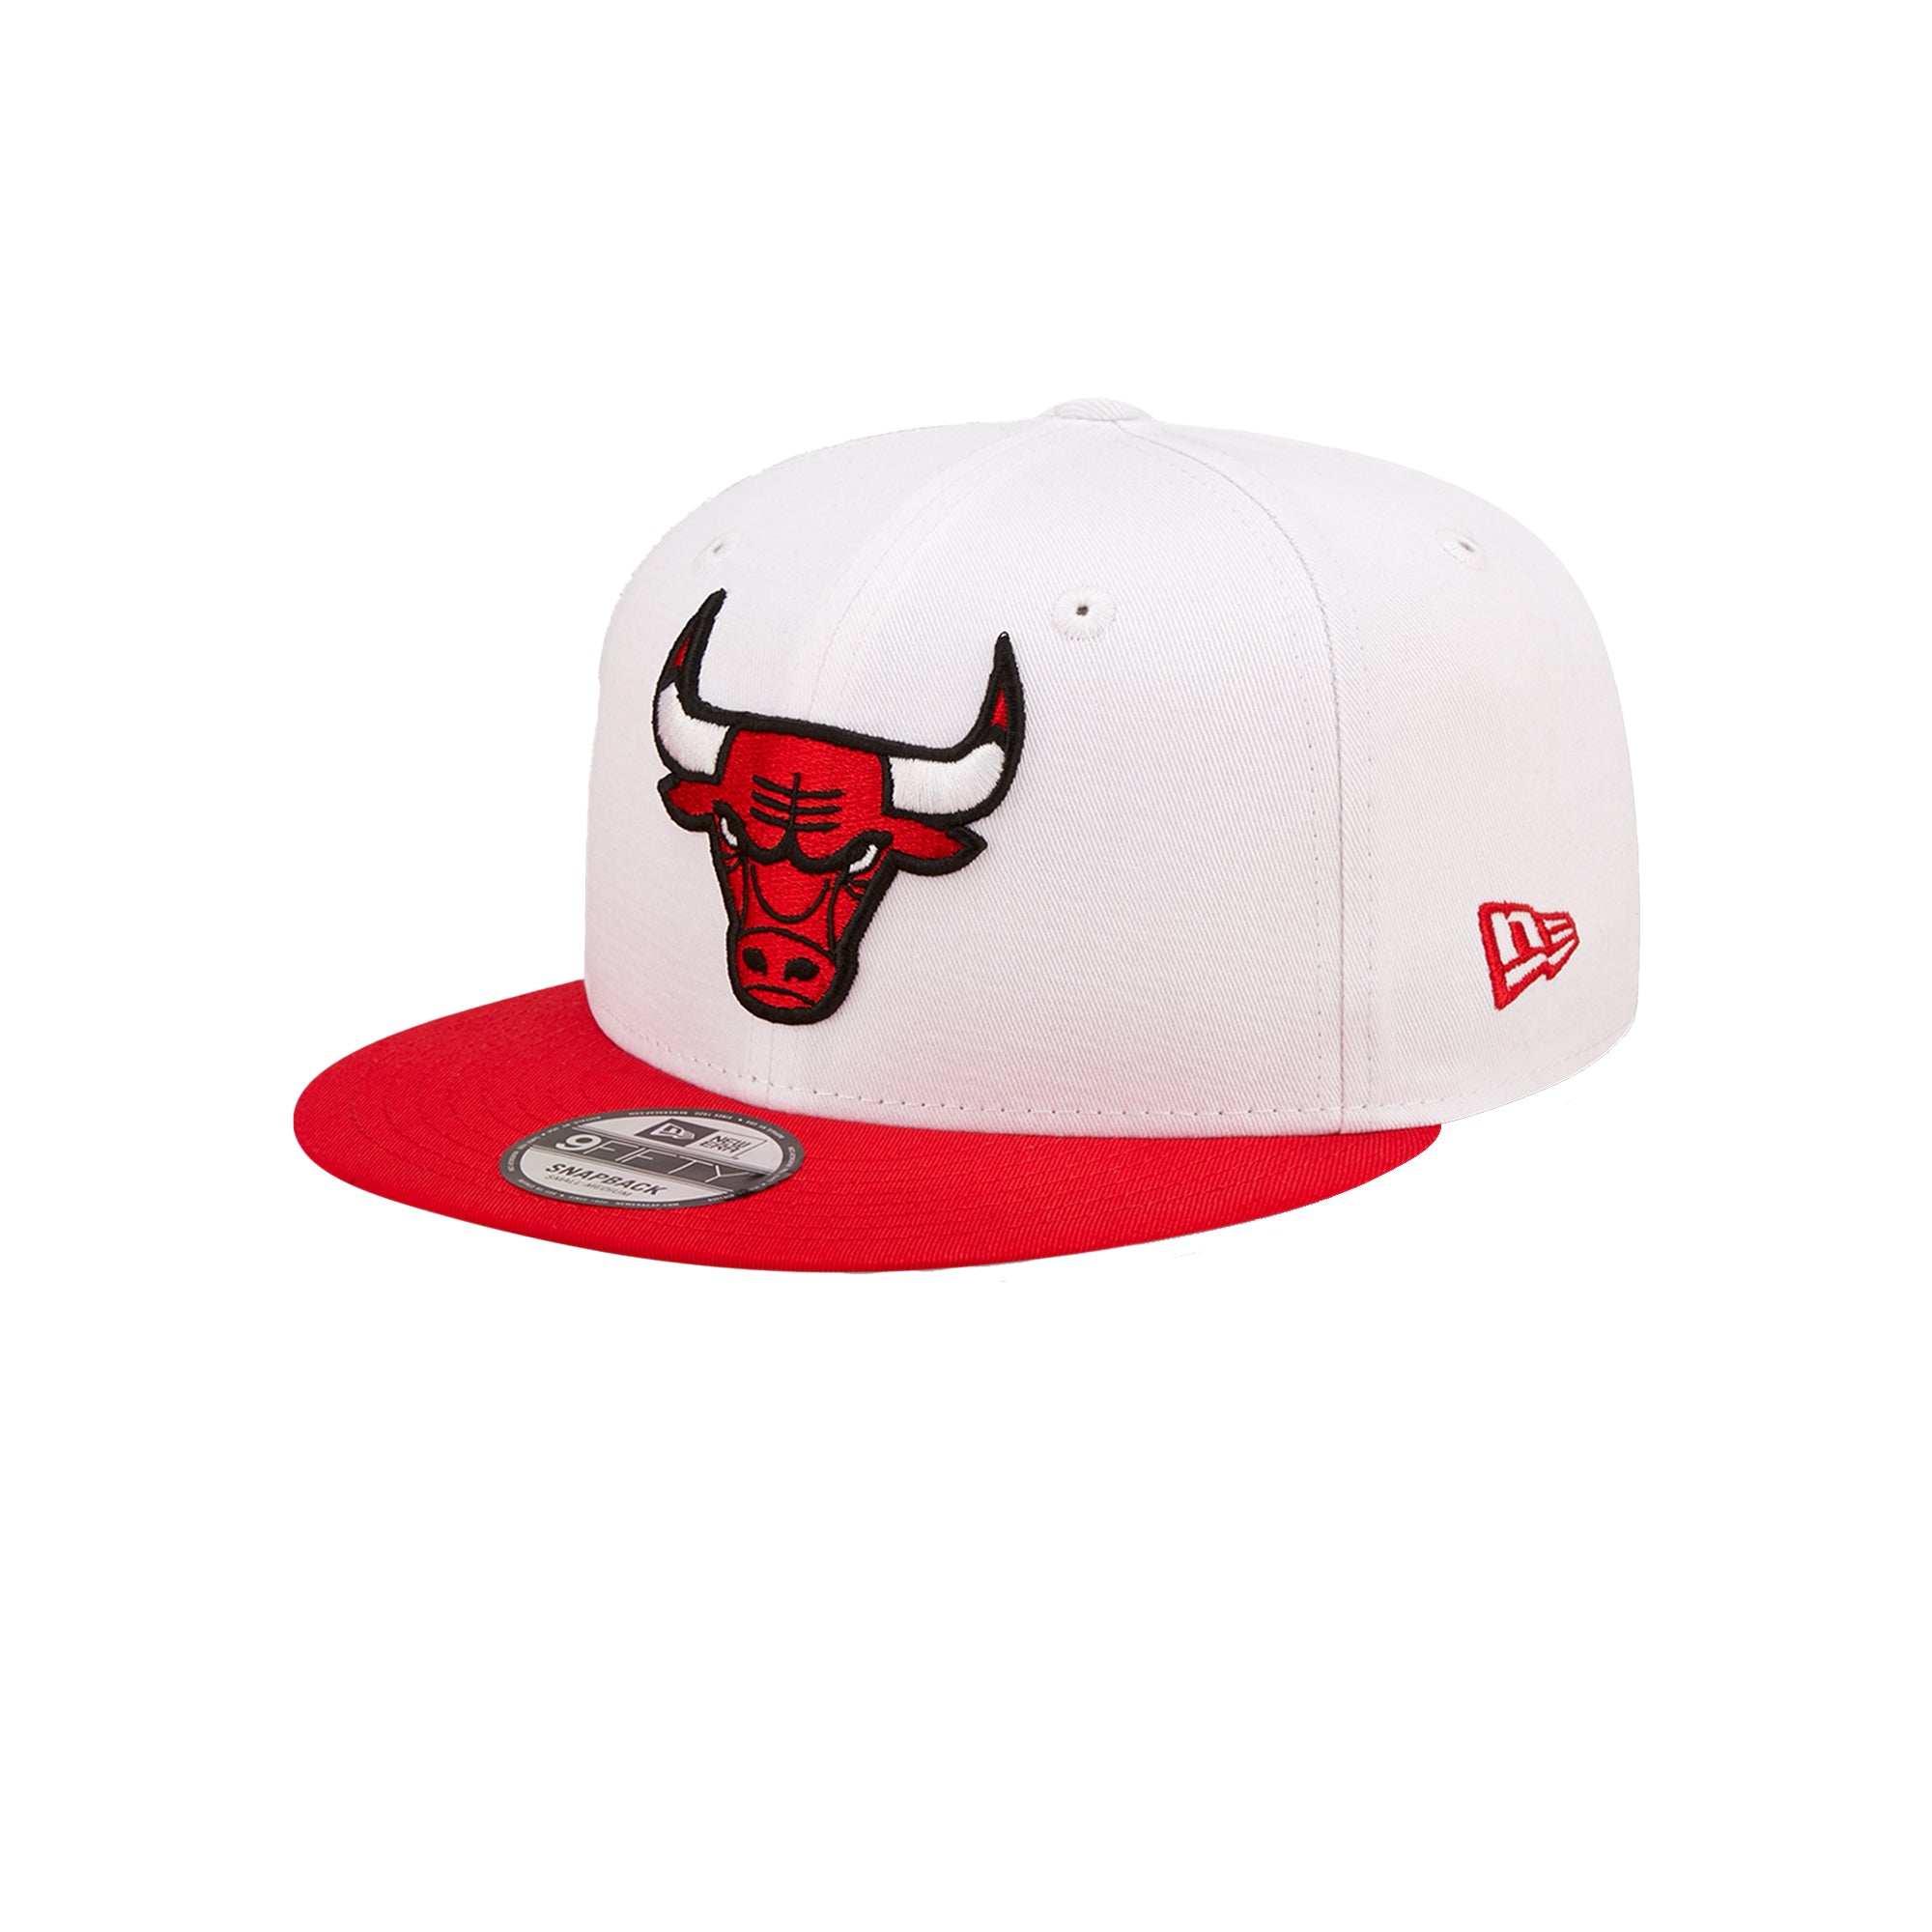 Chicago Bulls White Crown Team White 9FIFTY Snapback